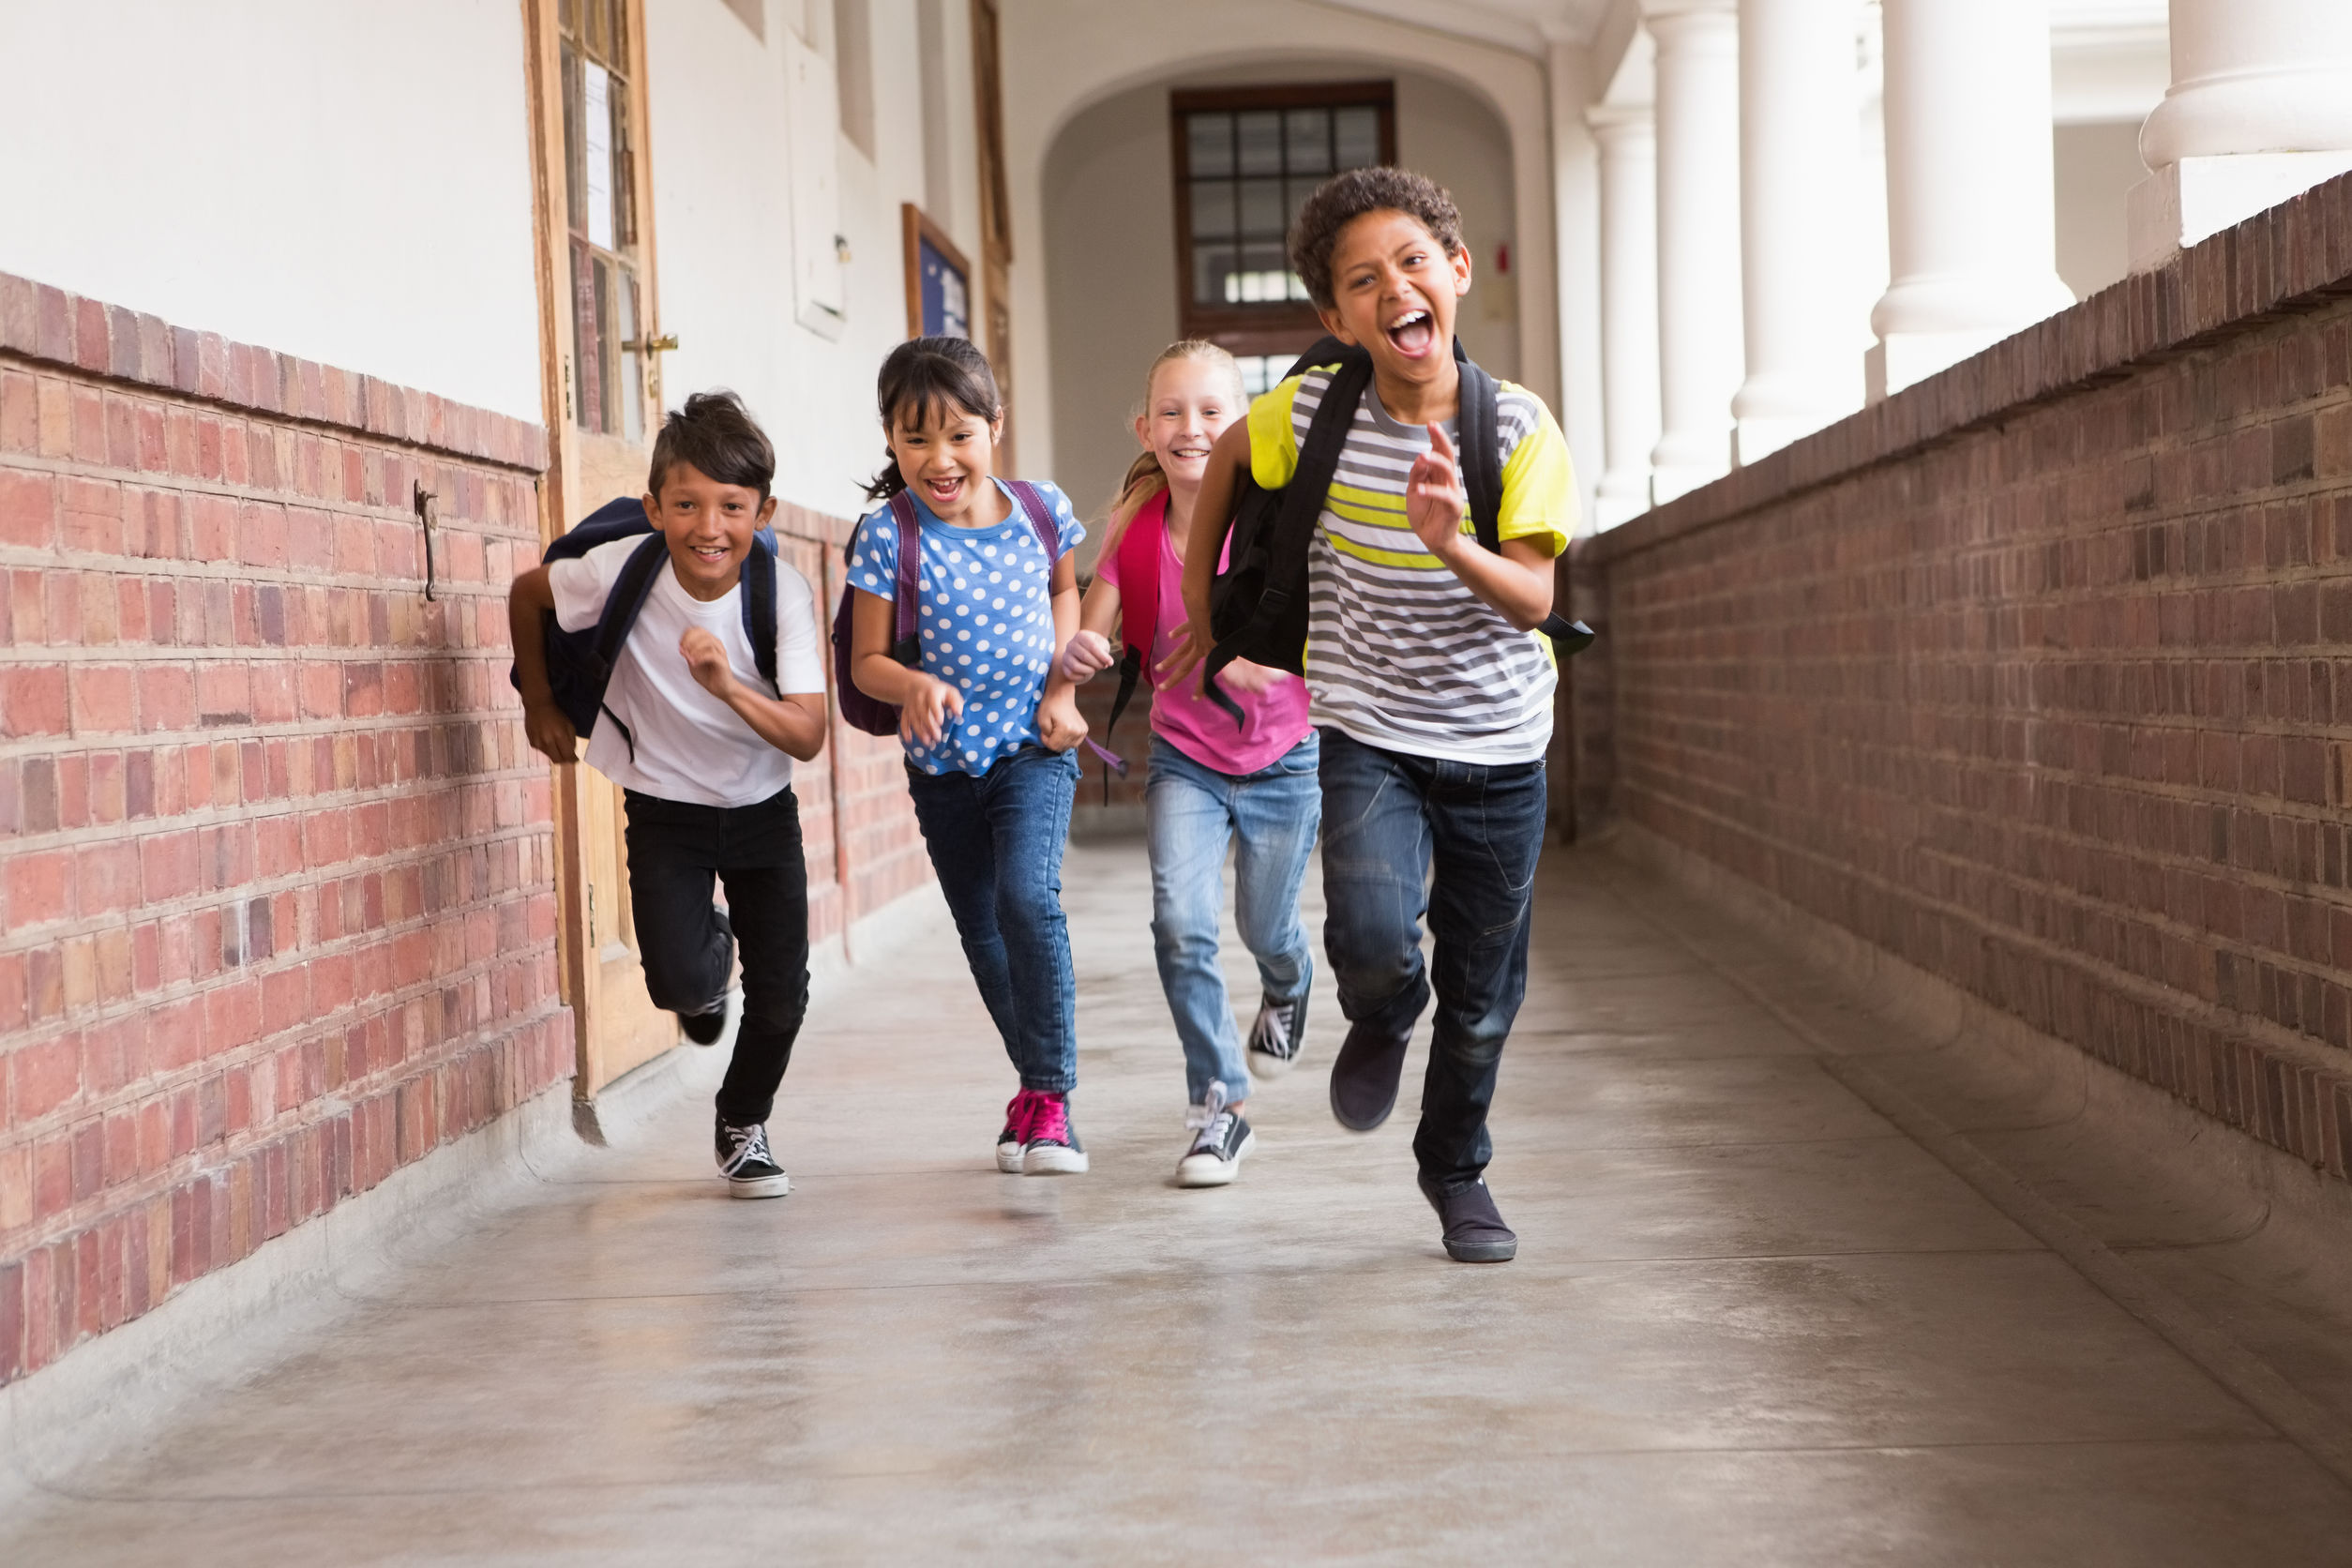 Possible school. Дети бегают в школе. Дети бегут в школу. Школьники бегут из школы. Школьник бежит.